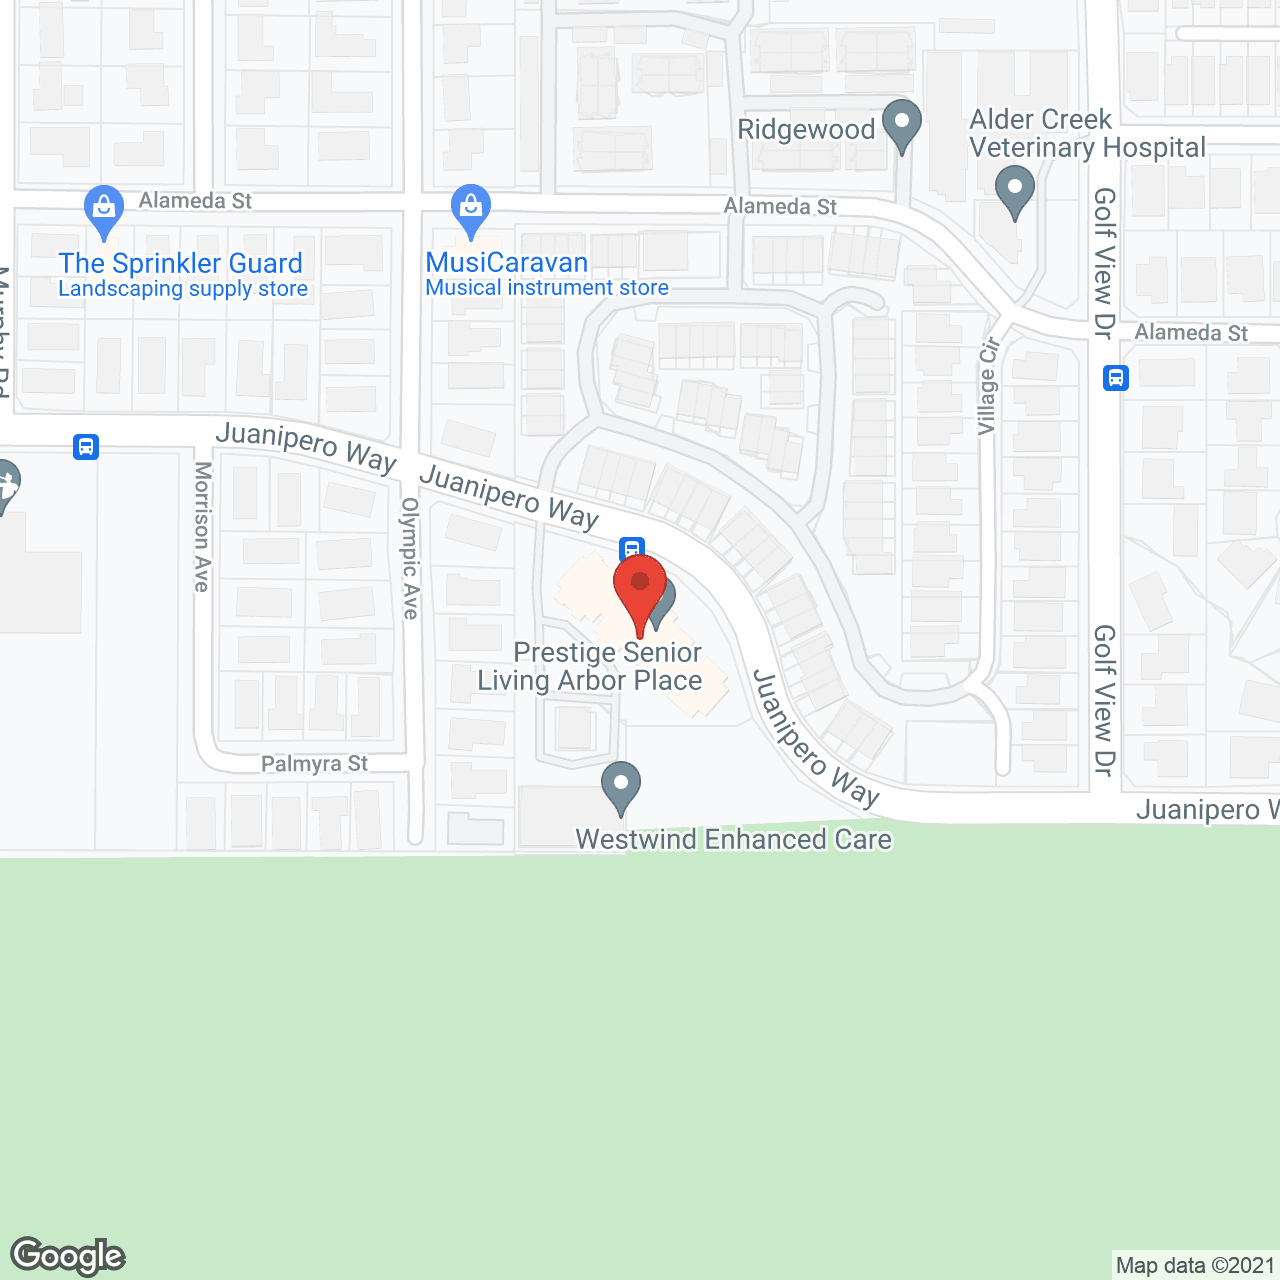 Prestige Senior Living Arbor Place in google map